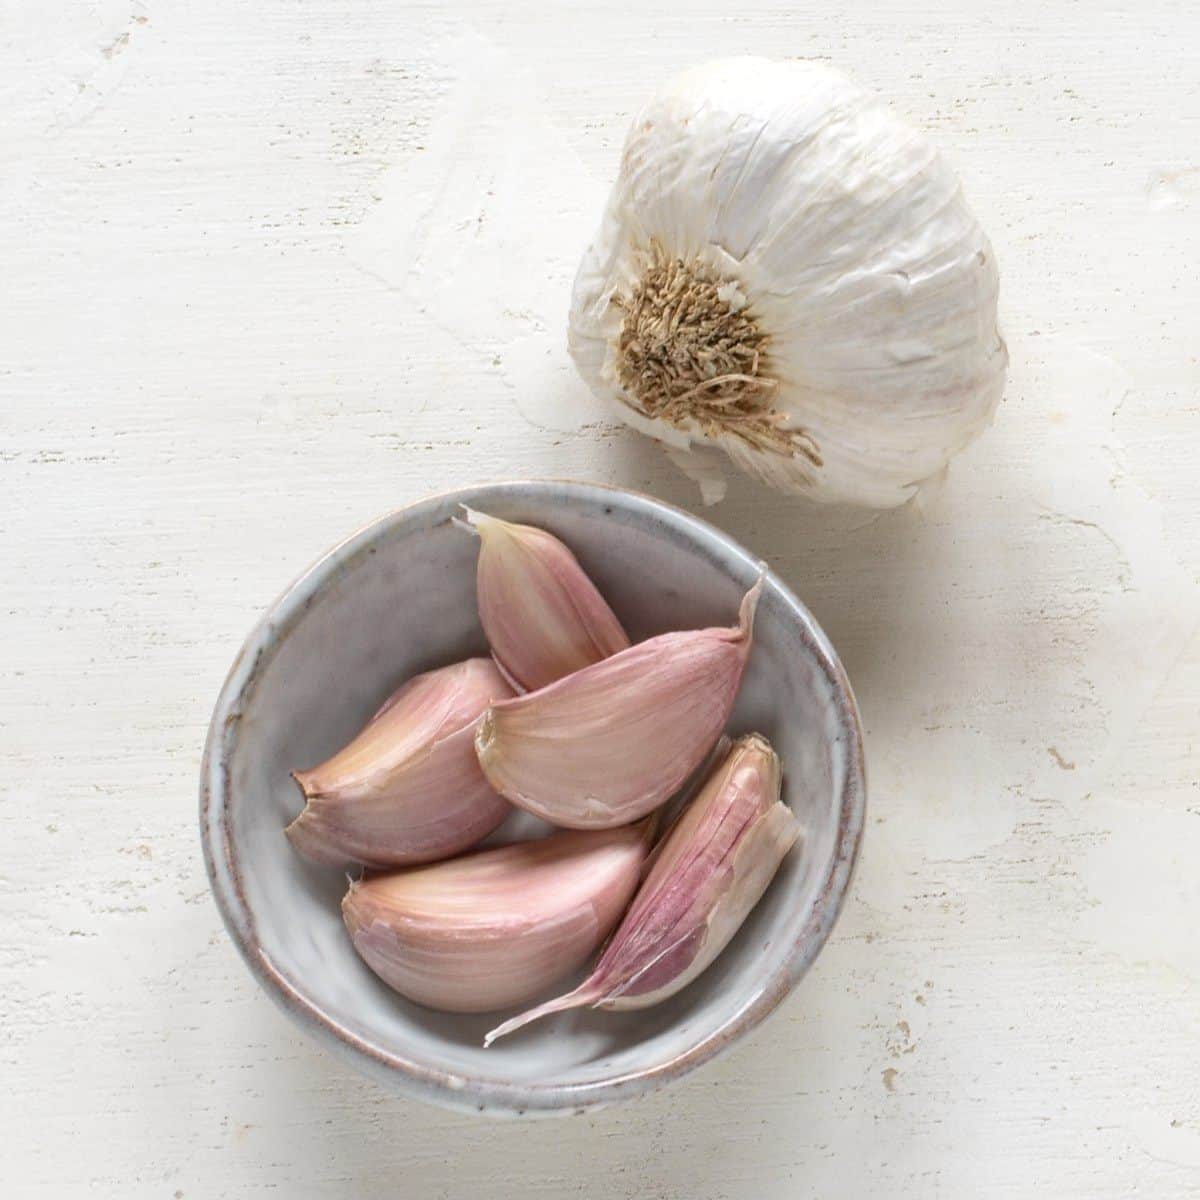 Garlic cloves in a small grey bowl.